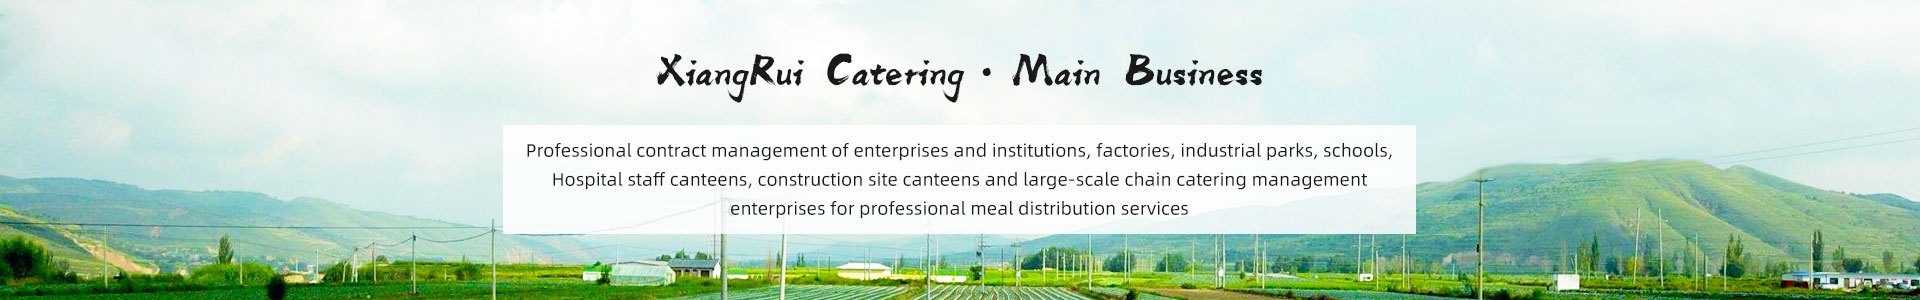 主营业务banner_主营业务banner_Shenzhen Xiangrui Catering Management Co., Ltd.